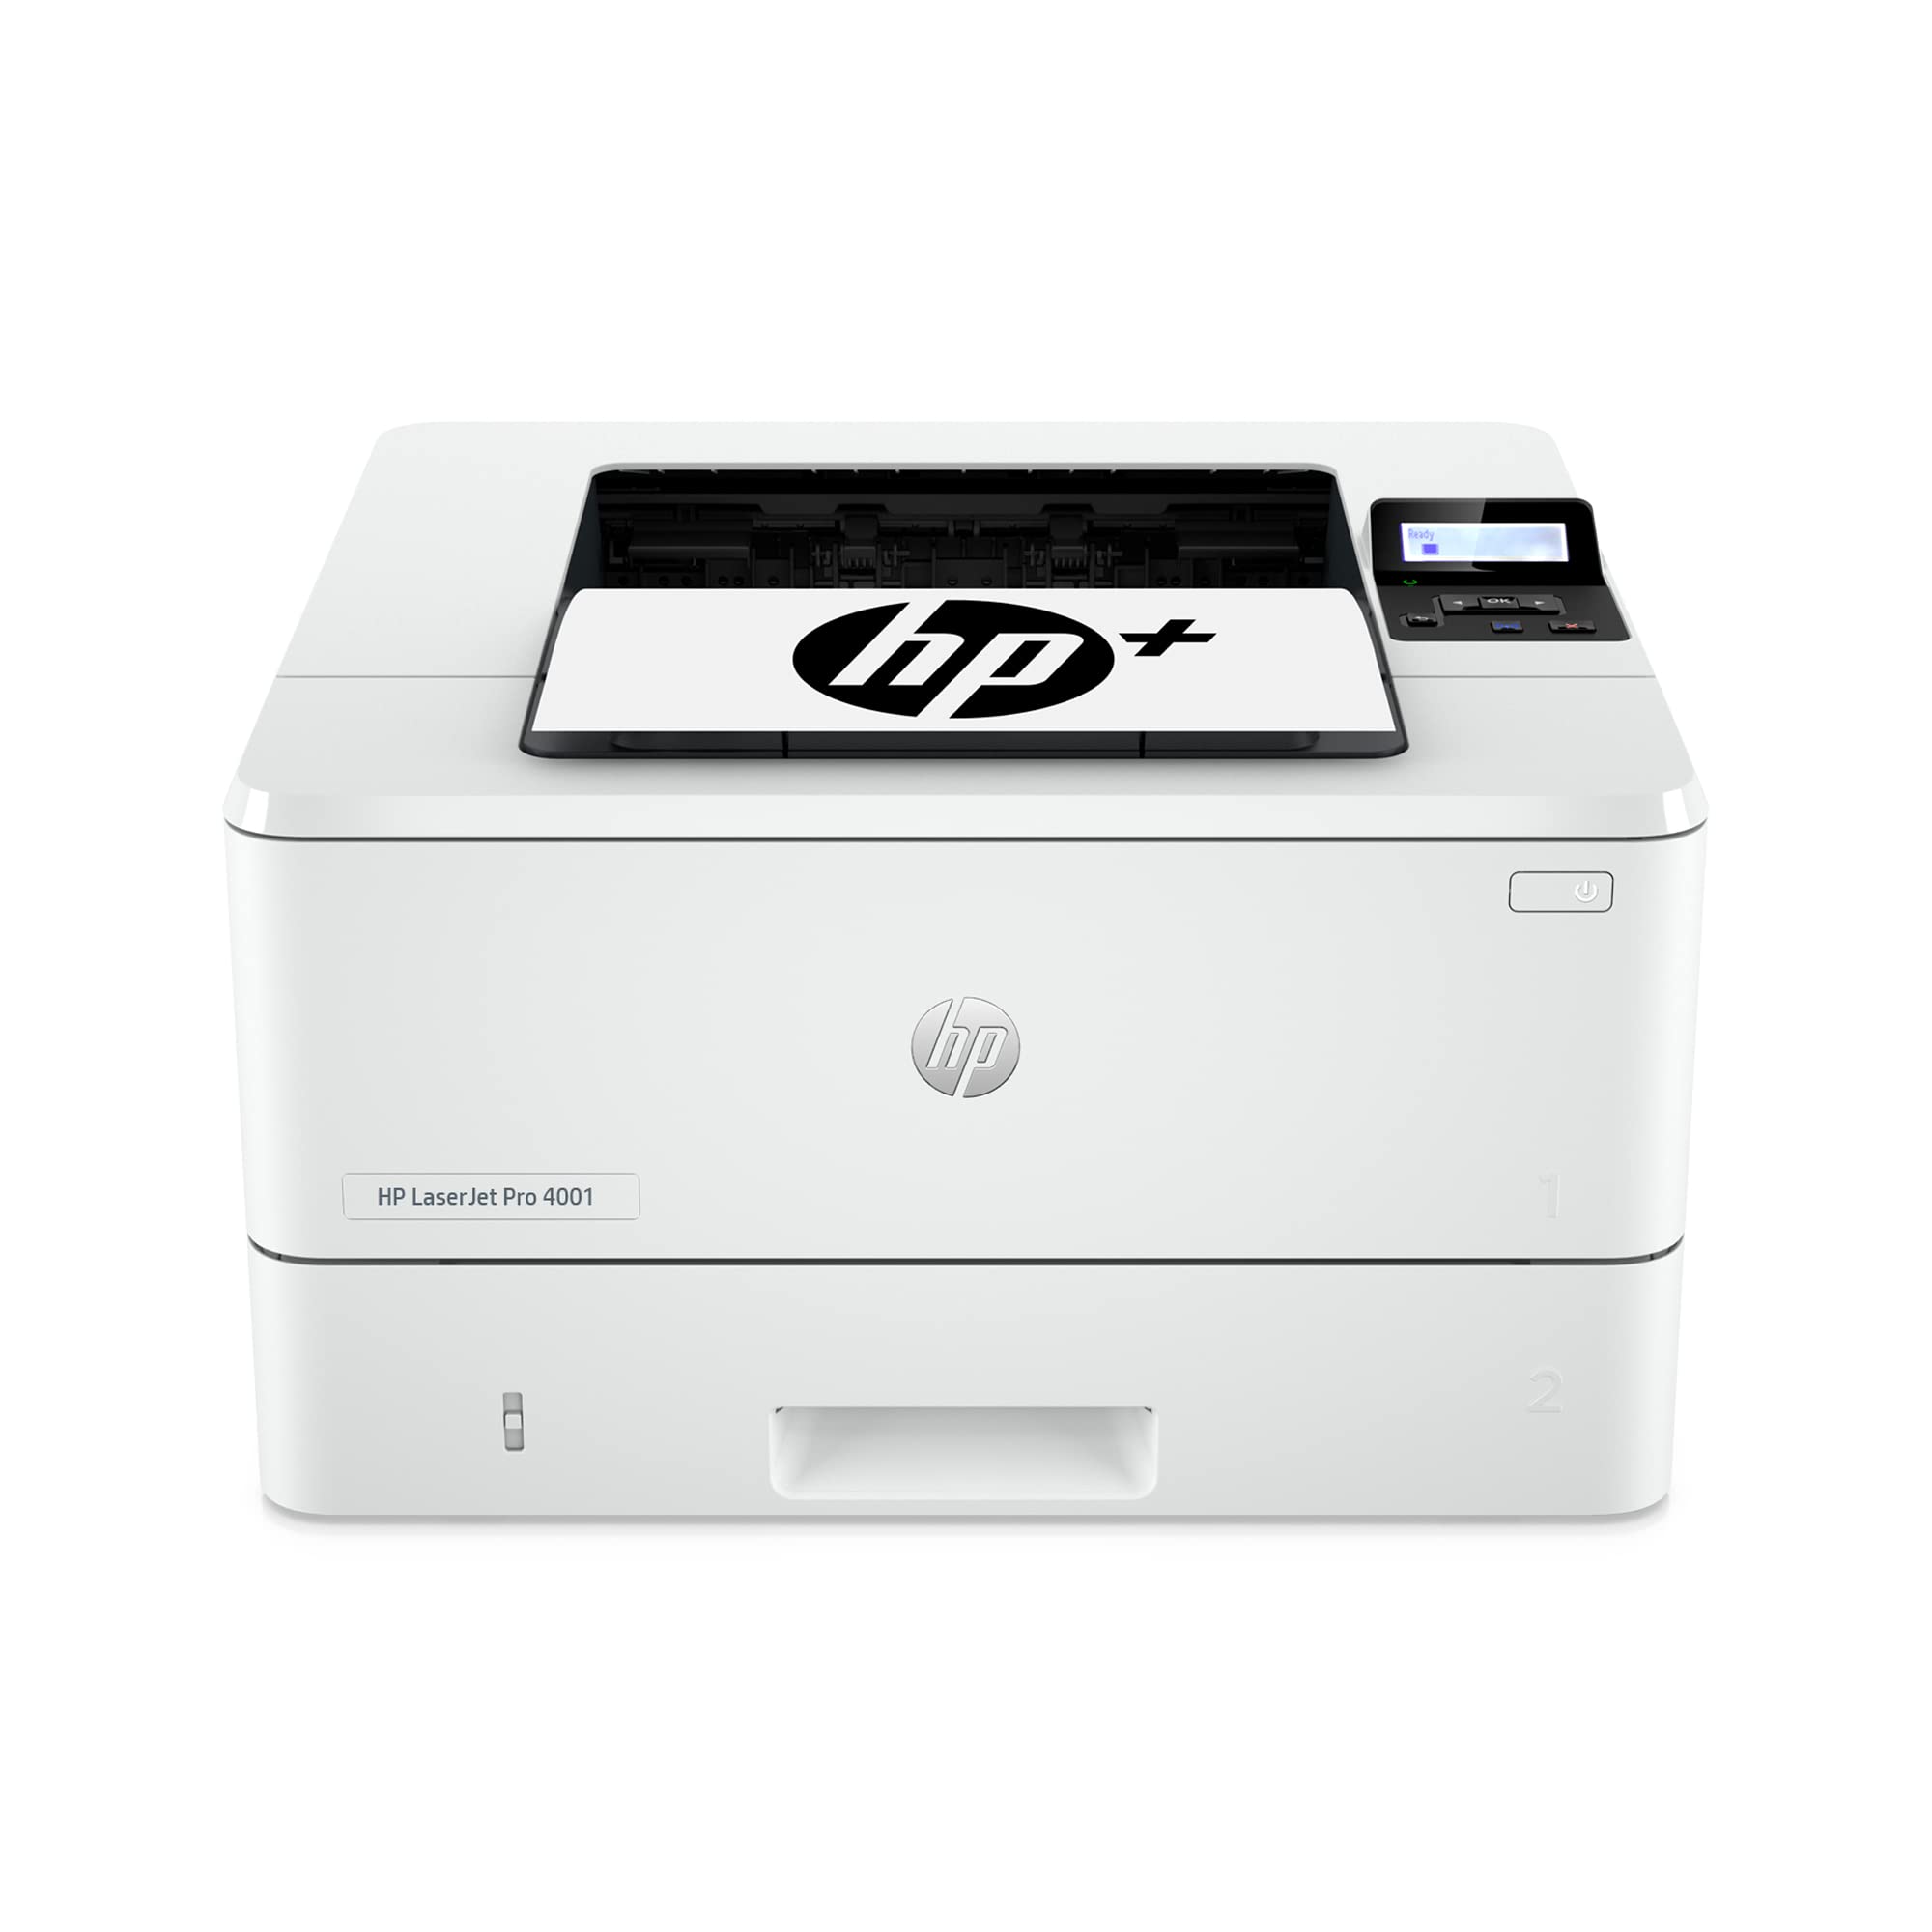 HP LaserJet Pro 4001dwe ワイヤレス白黒プリンター + スマート オフィス機能付き